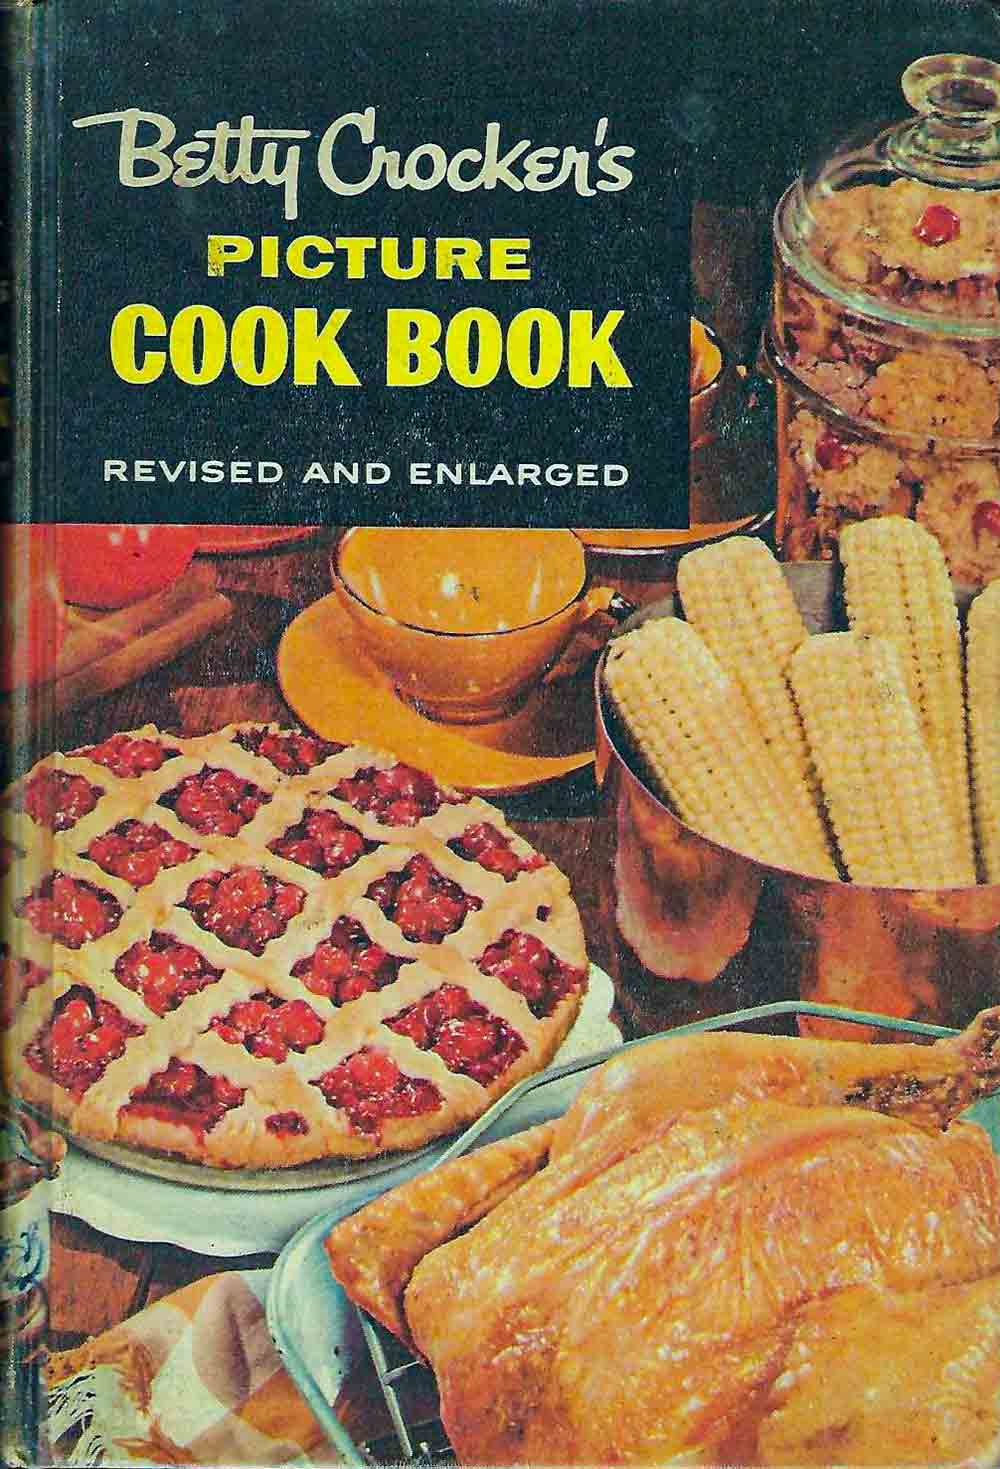 Betty Crocker's Picture Cookbook.